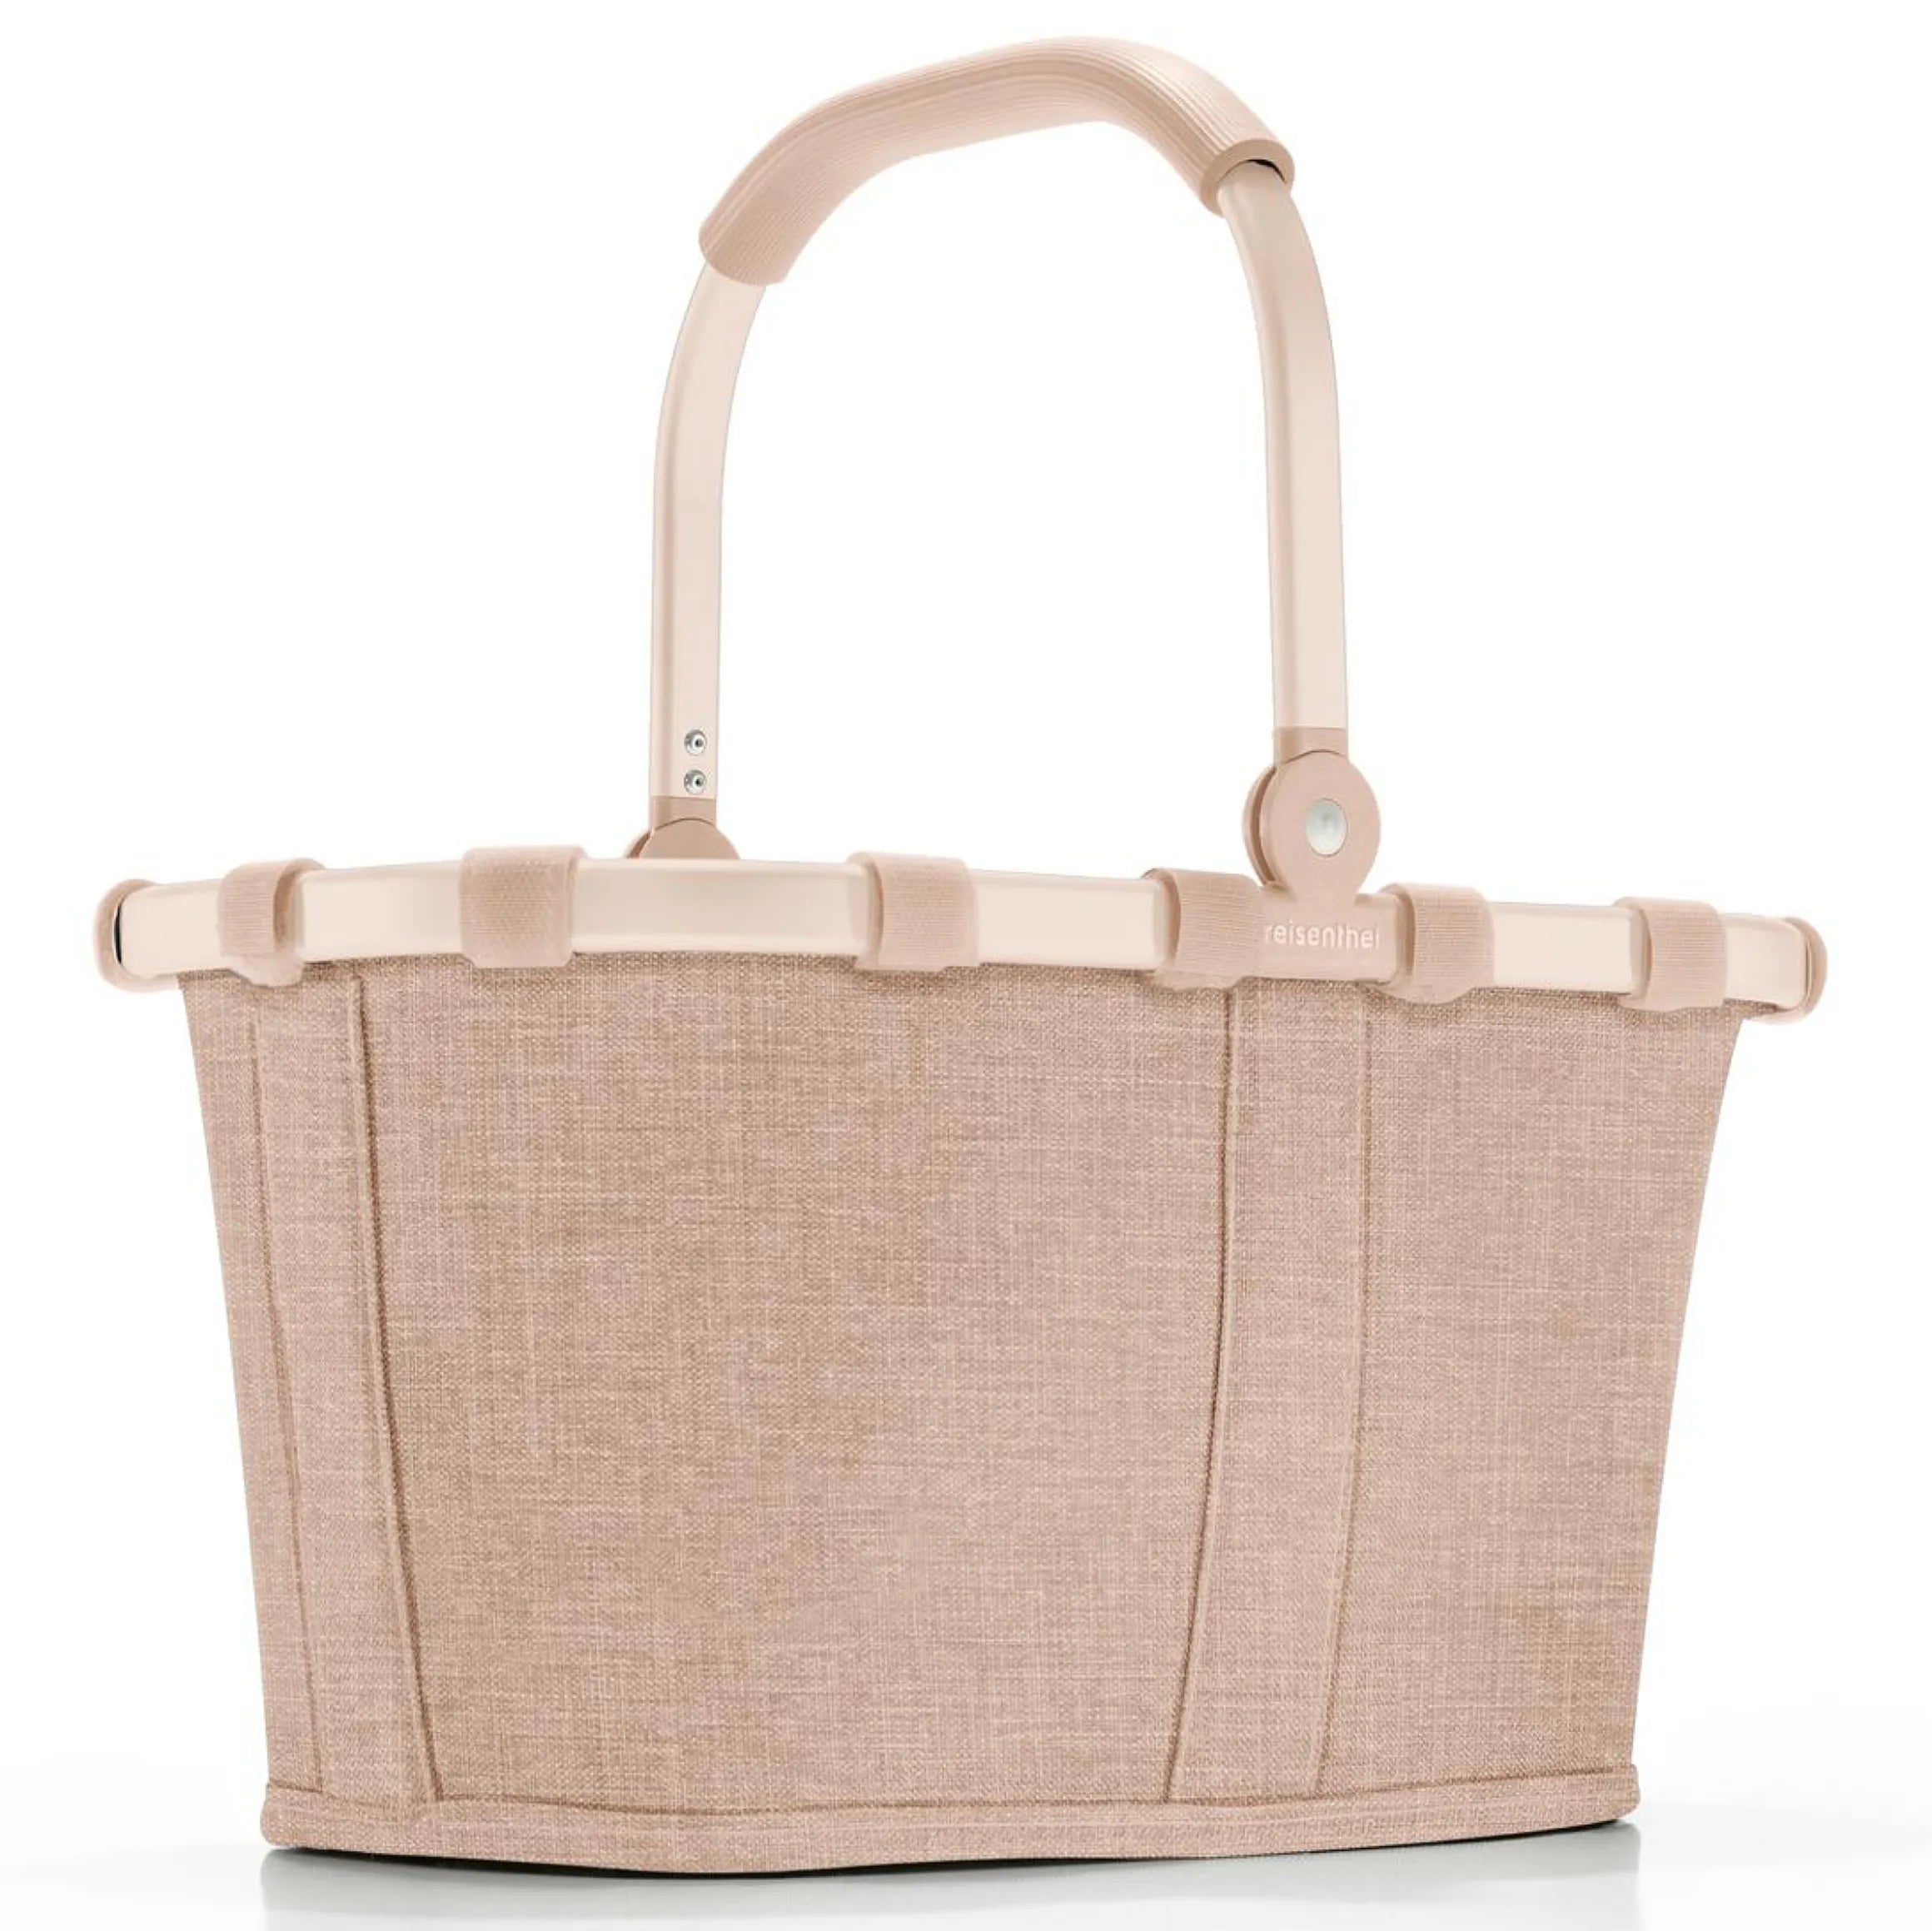 Reisenthel Shopping Carrybag XS children's shopping basket 33 cm - Frame Twist Coffee